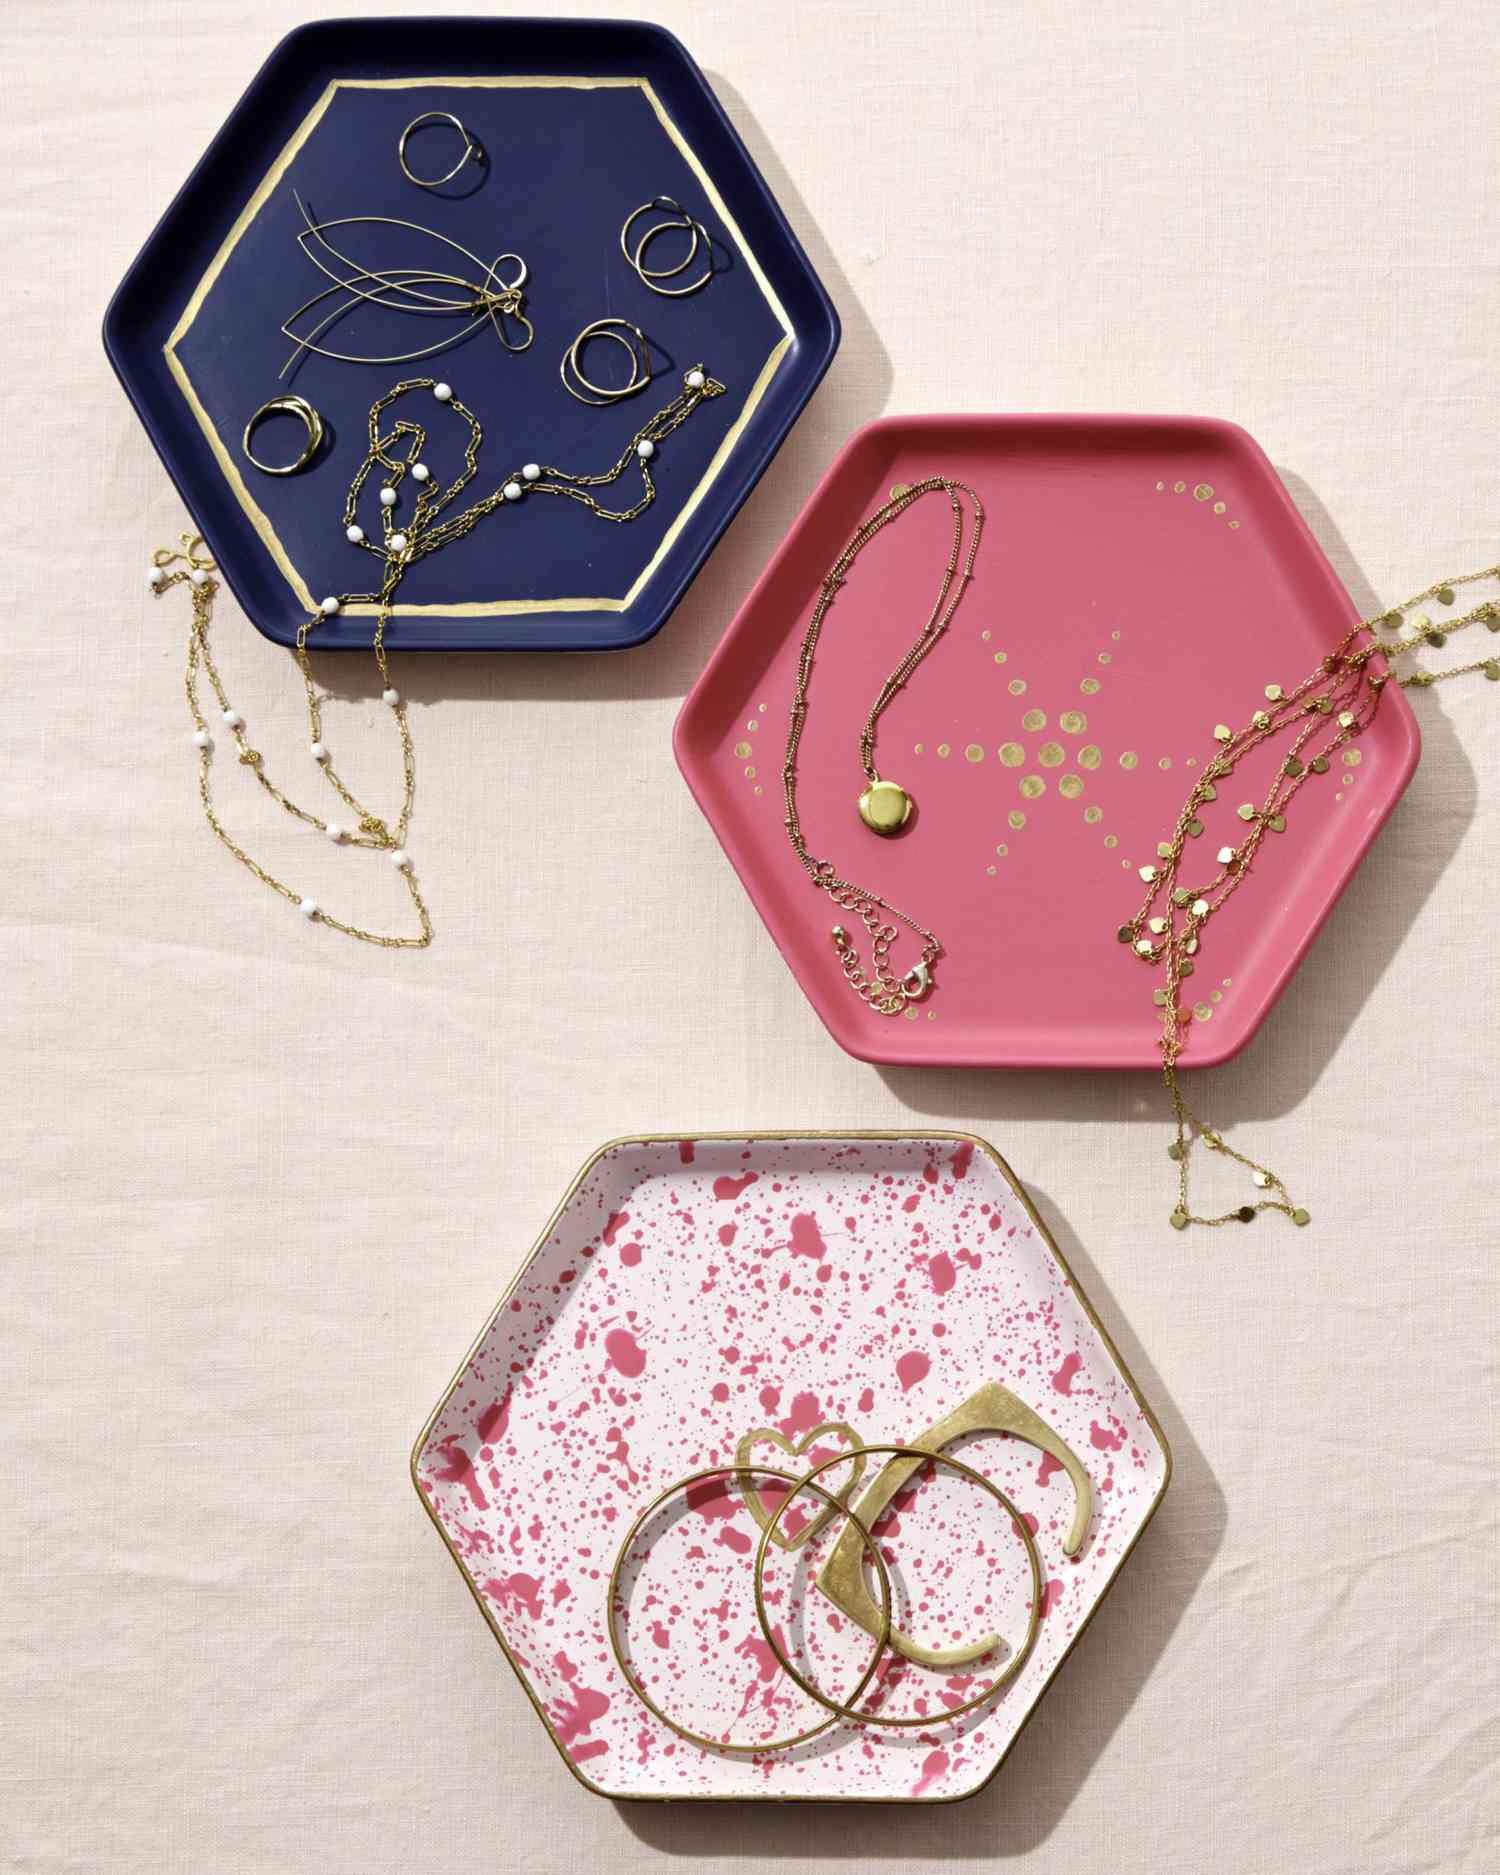 Pressed Flower & Butterfly Organizing Tray Trinket Tray Jewelry Holder